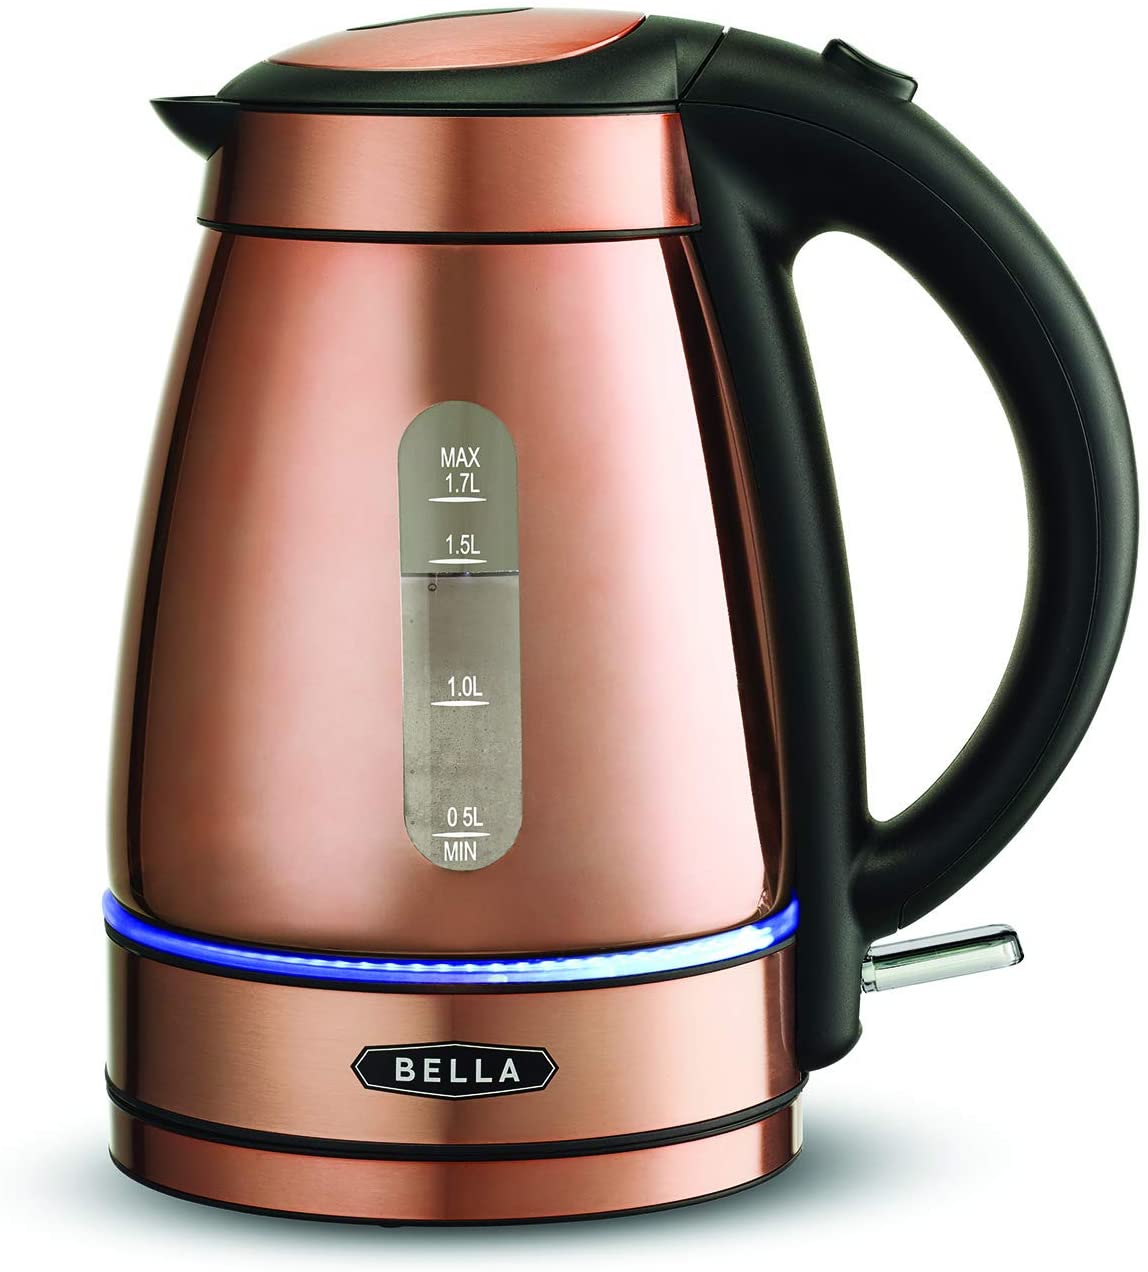 BELLA 1.7 Liter Electric Tea Kettle Copper Chrome